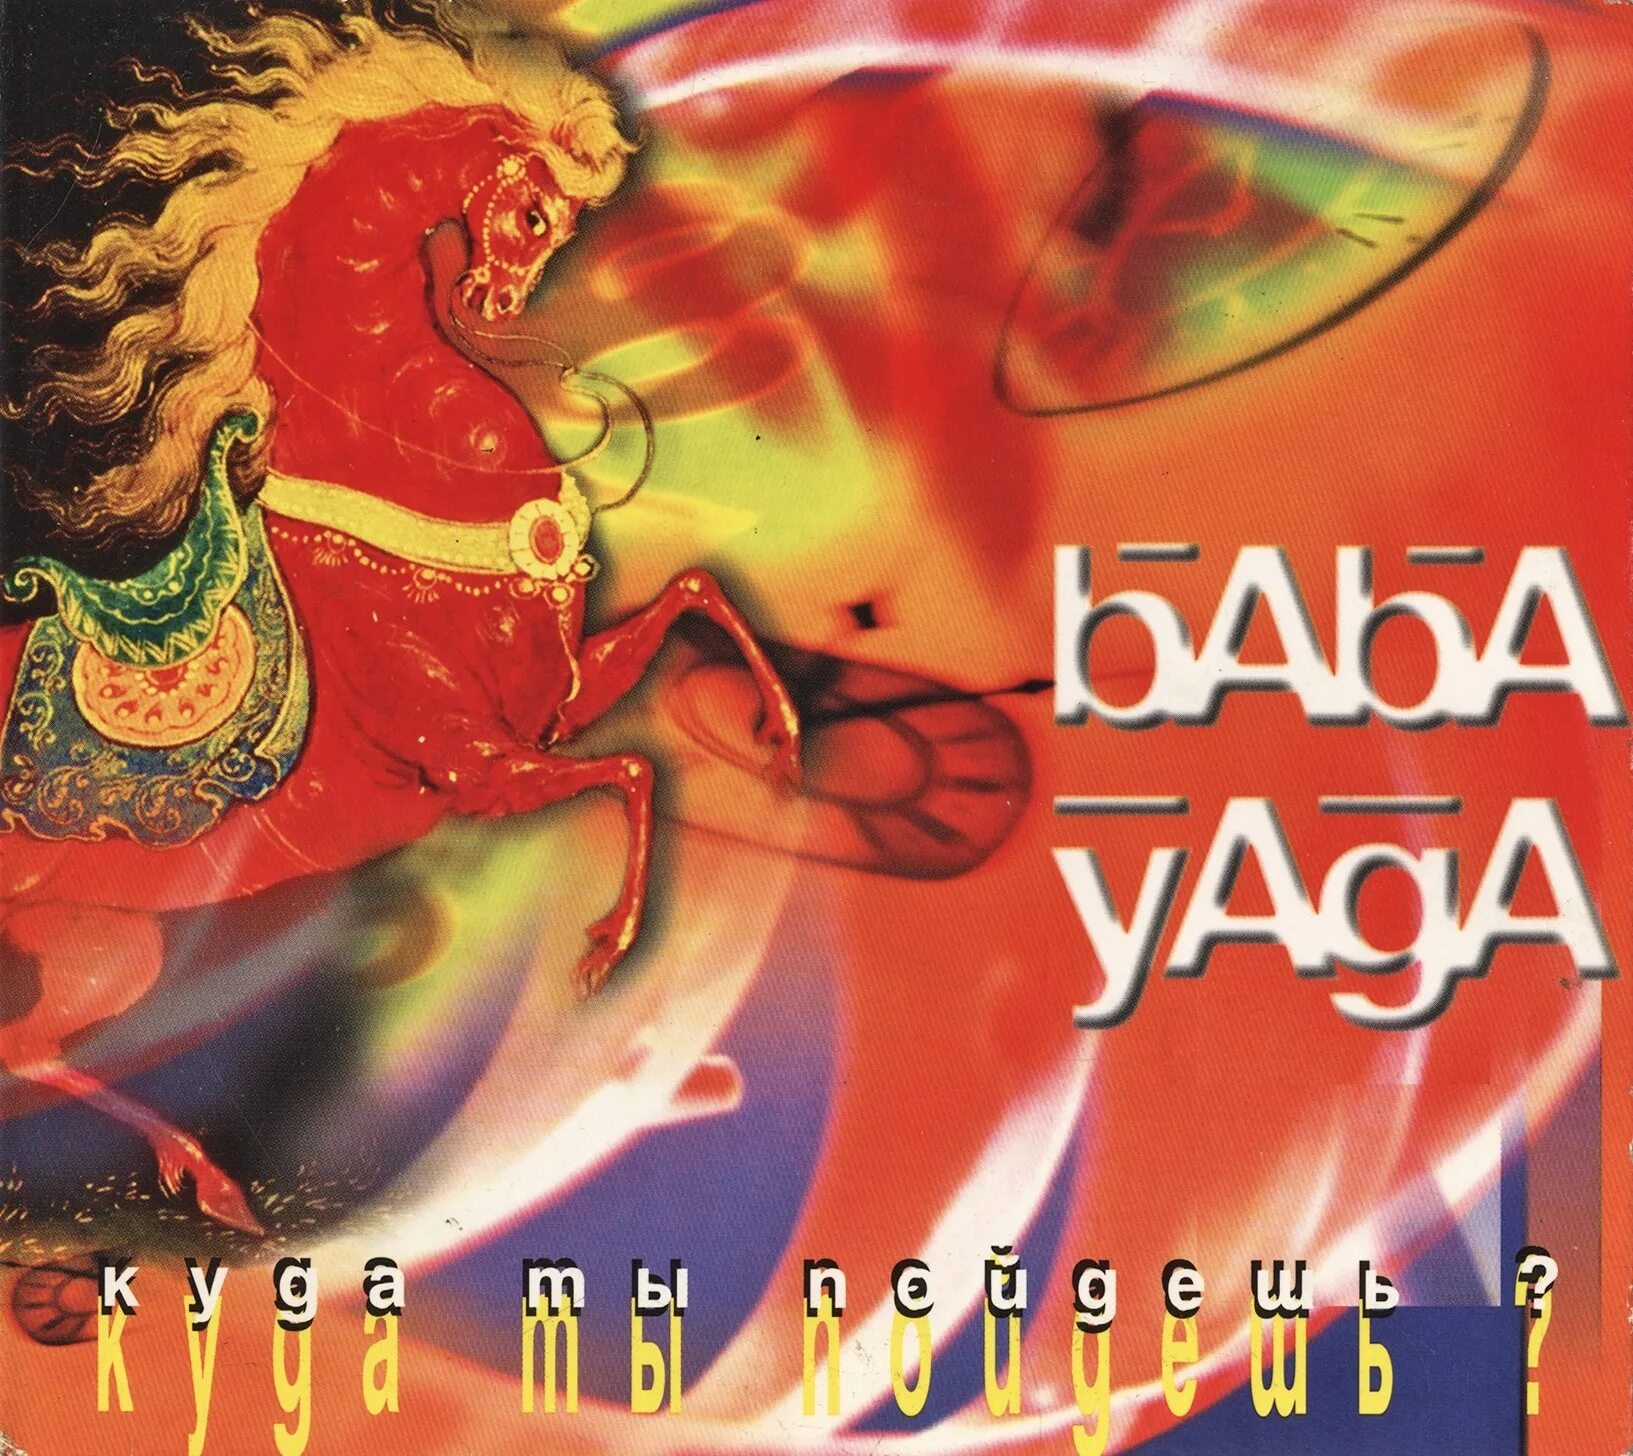 Группа Baba Yaga. Баба Яга so ends another Day. Baba Yaga - 1993 - куда ты пойдешь. Гр на на баба Яга. Группа баба яга ой не вечер